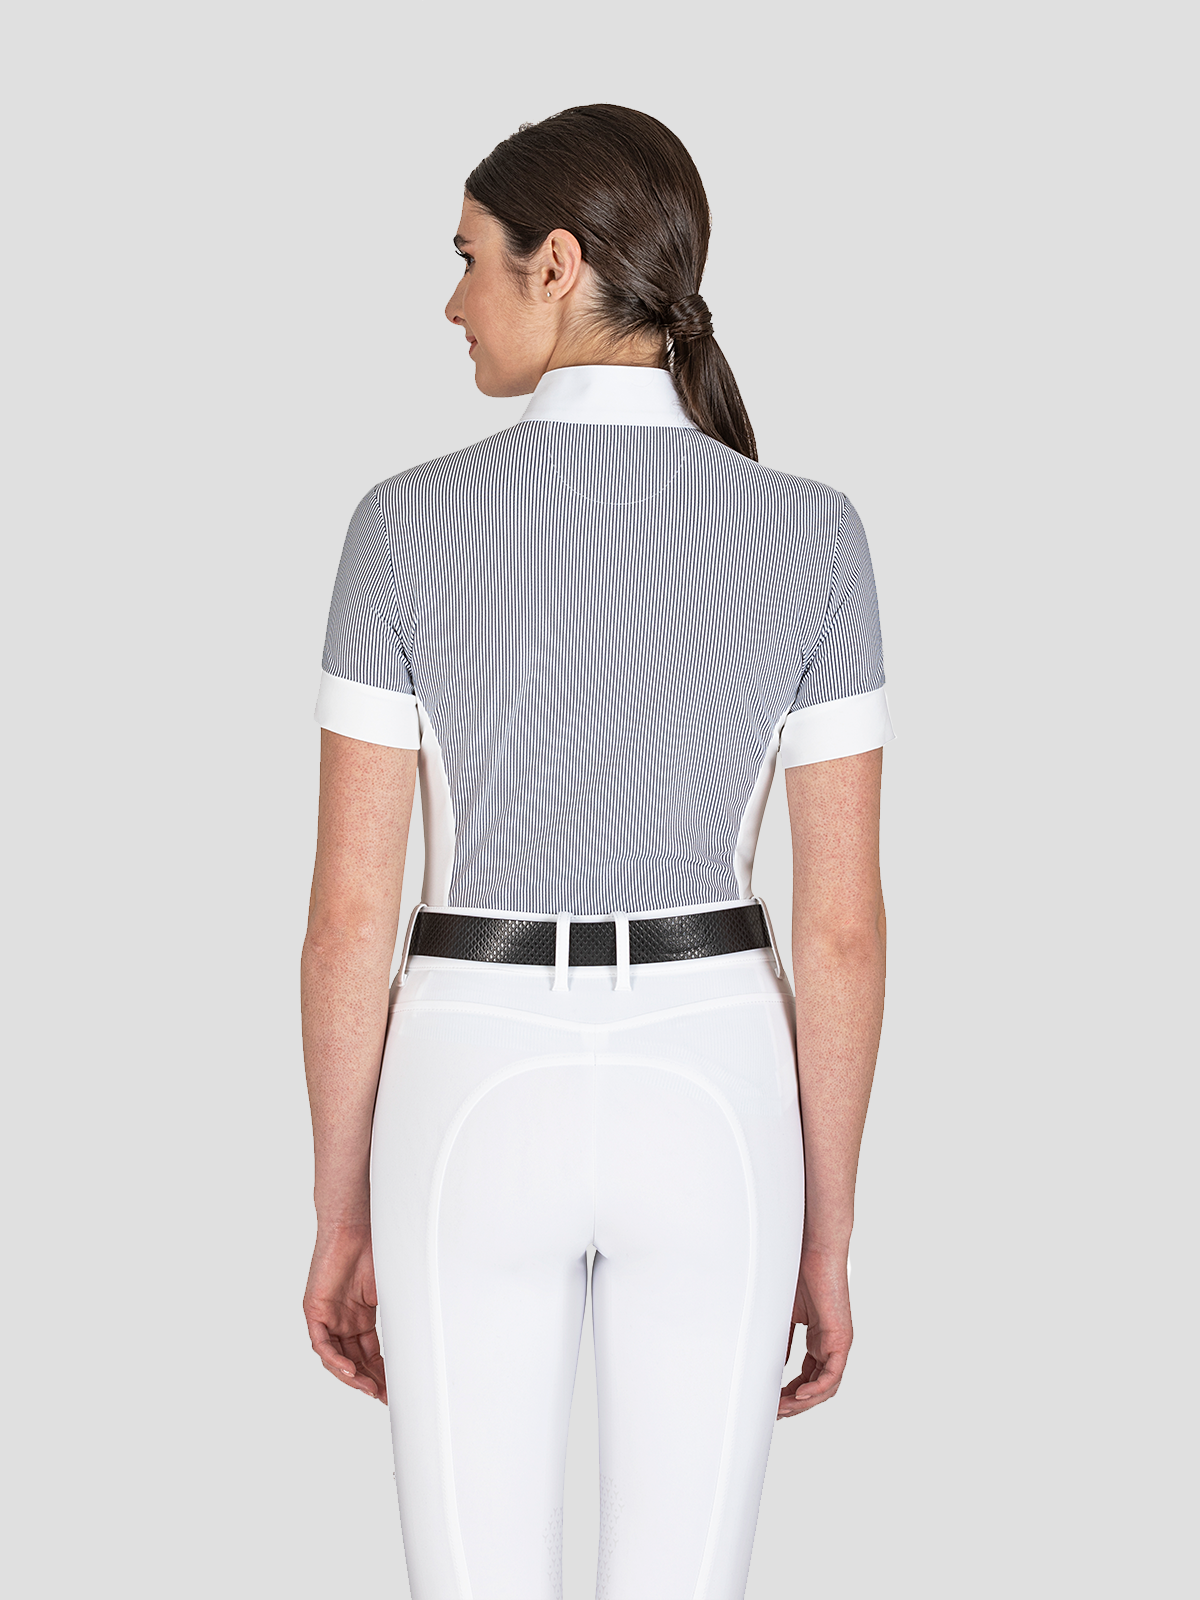 Eliciae Short Sleeve Women's Pinstripe Show Shirt - rear view